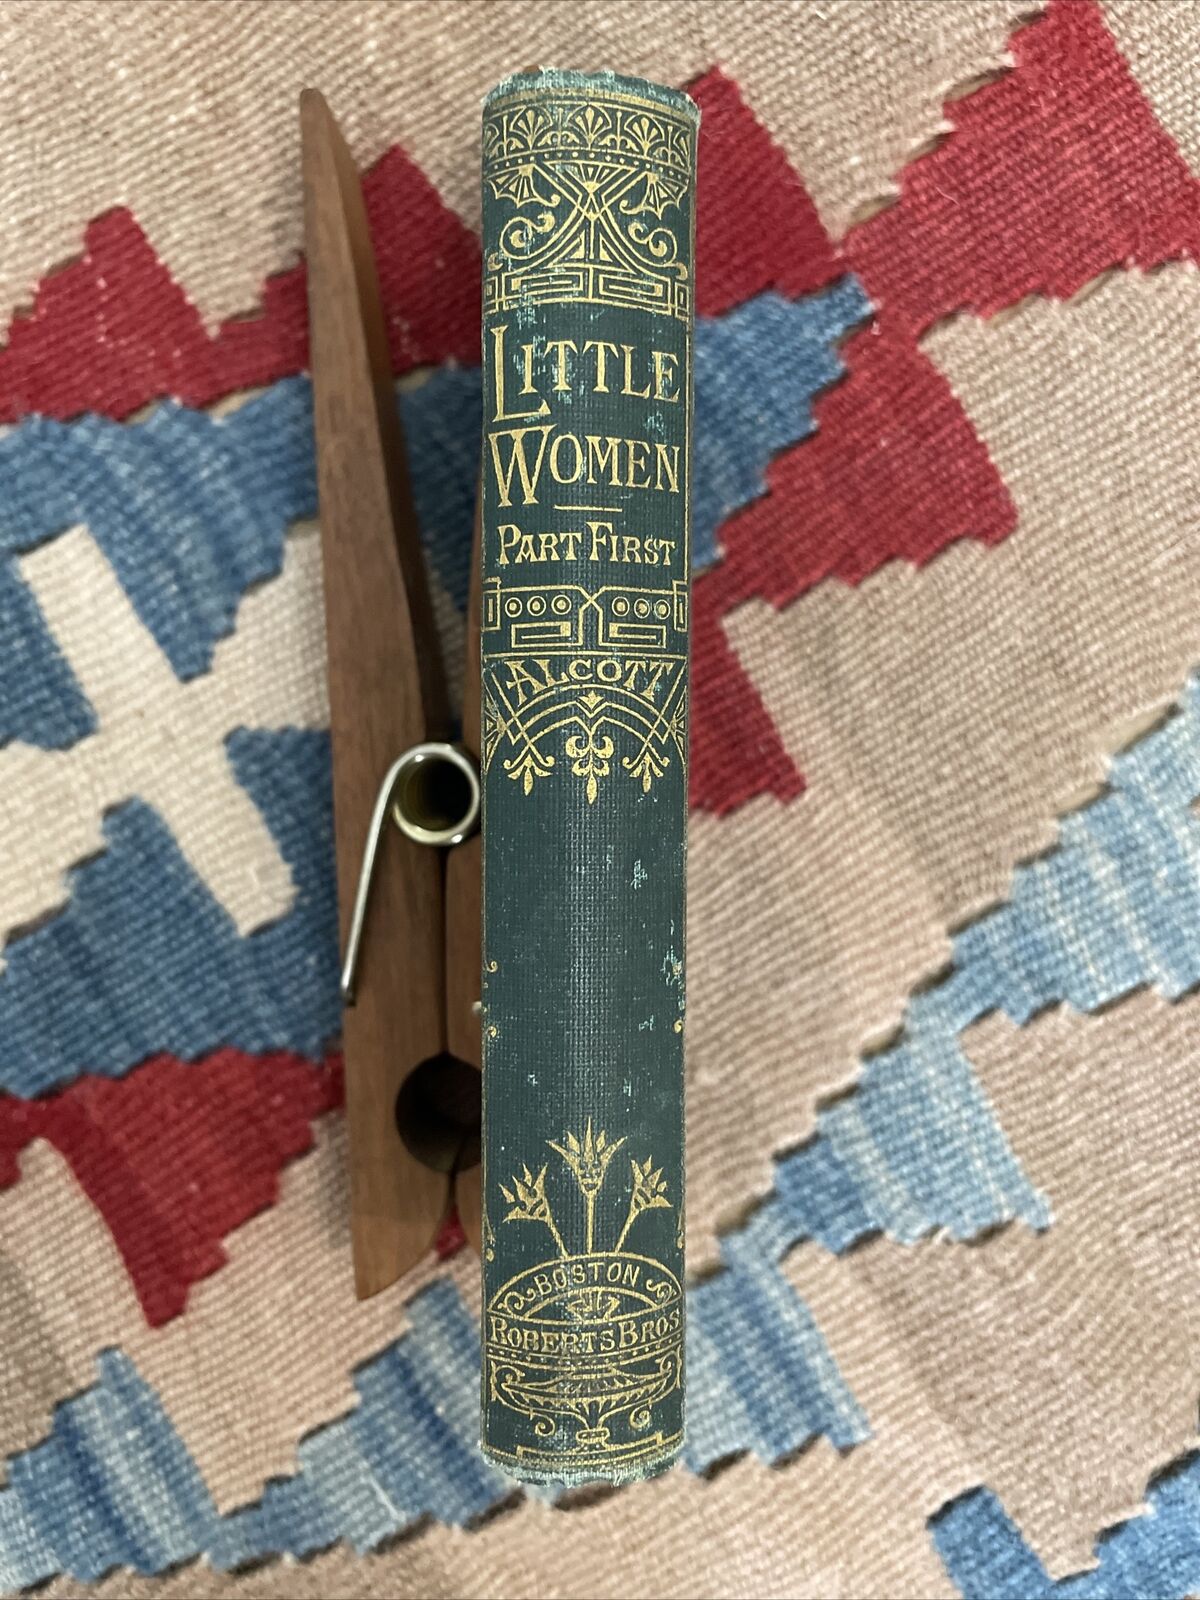 1872 Louisa M. Alcott Little Women Part First Roberts Brothers Antique